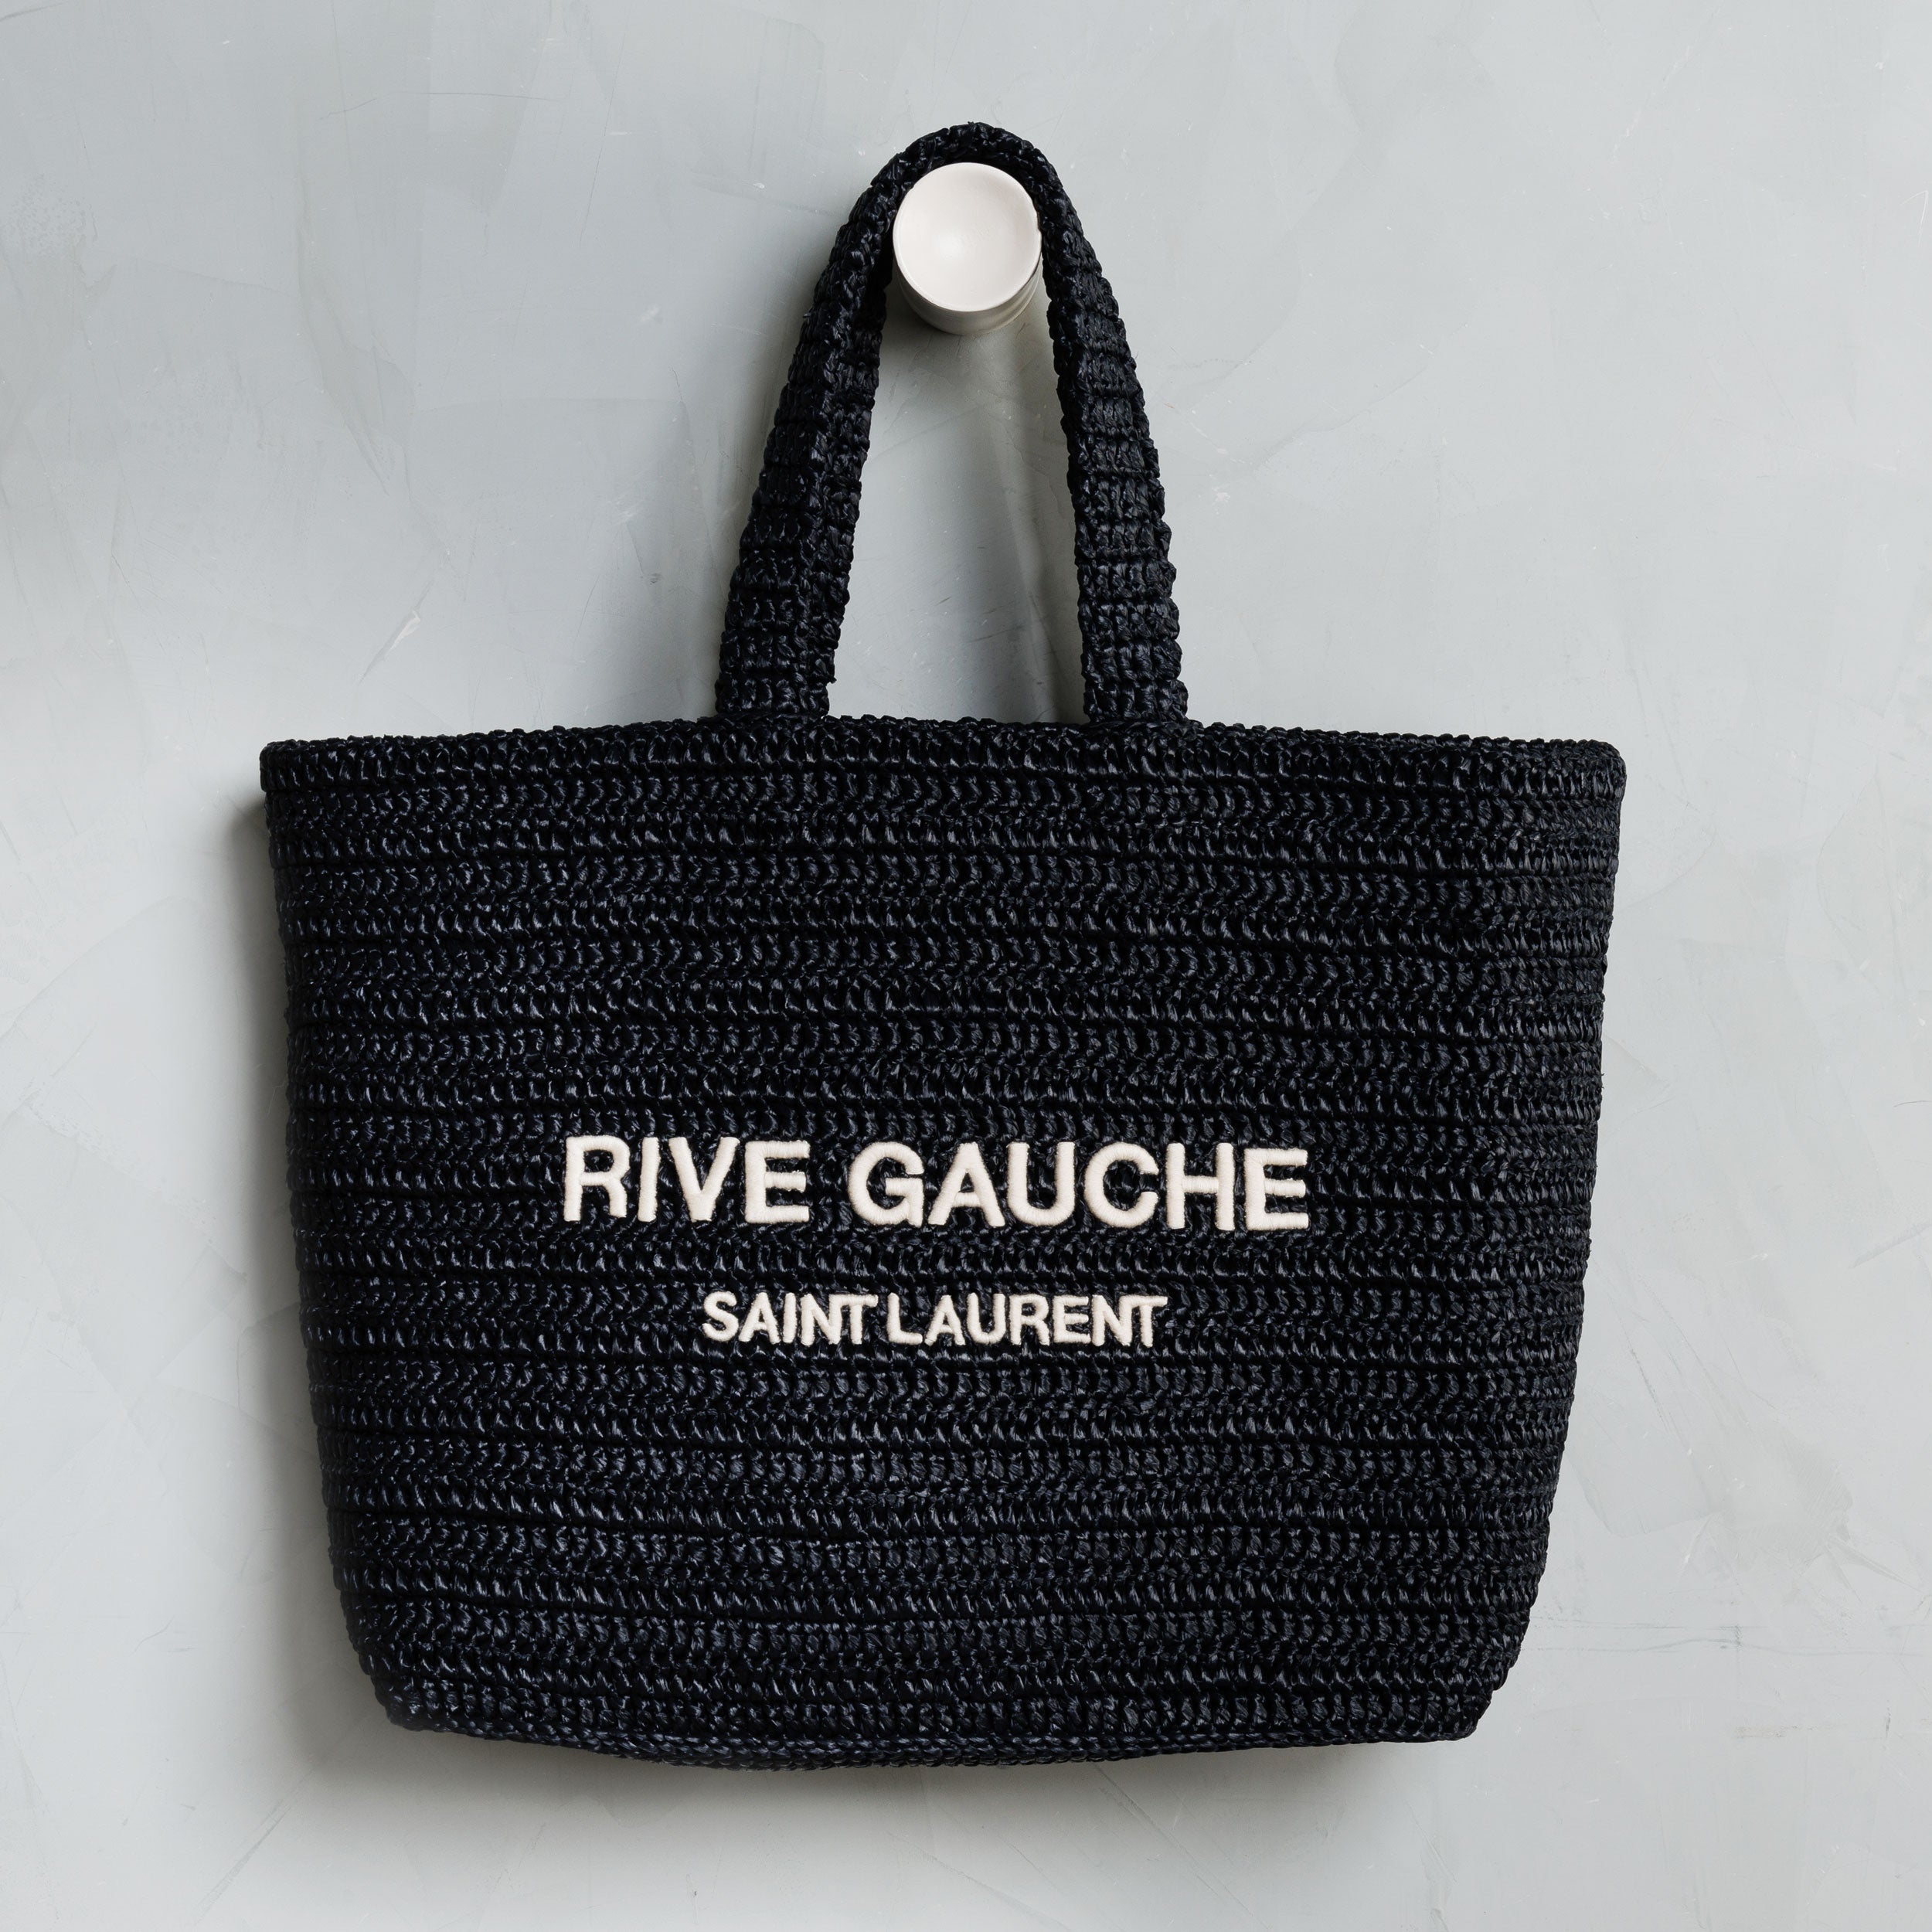 Saint Laurent Medium Rive Gauche Tote Bag in Beige & Sea Salt